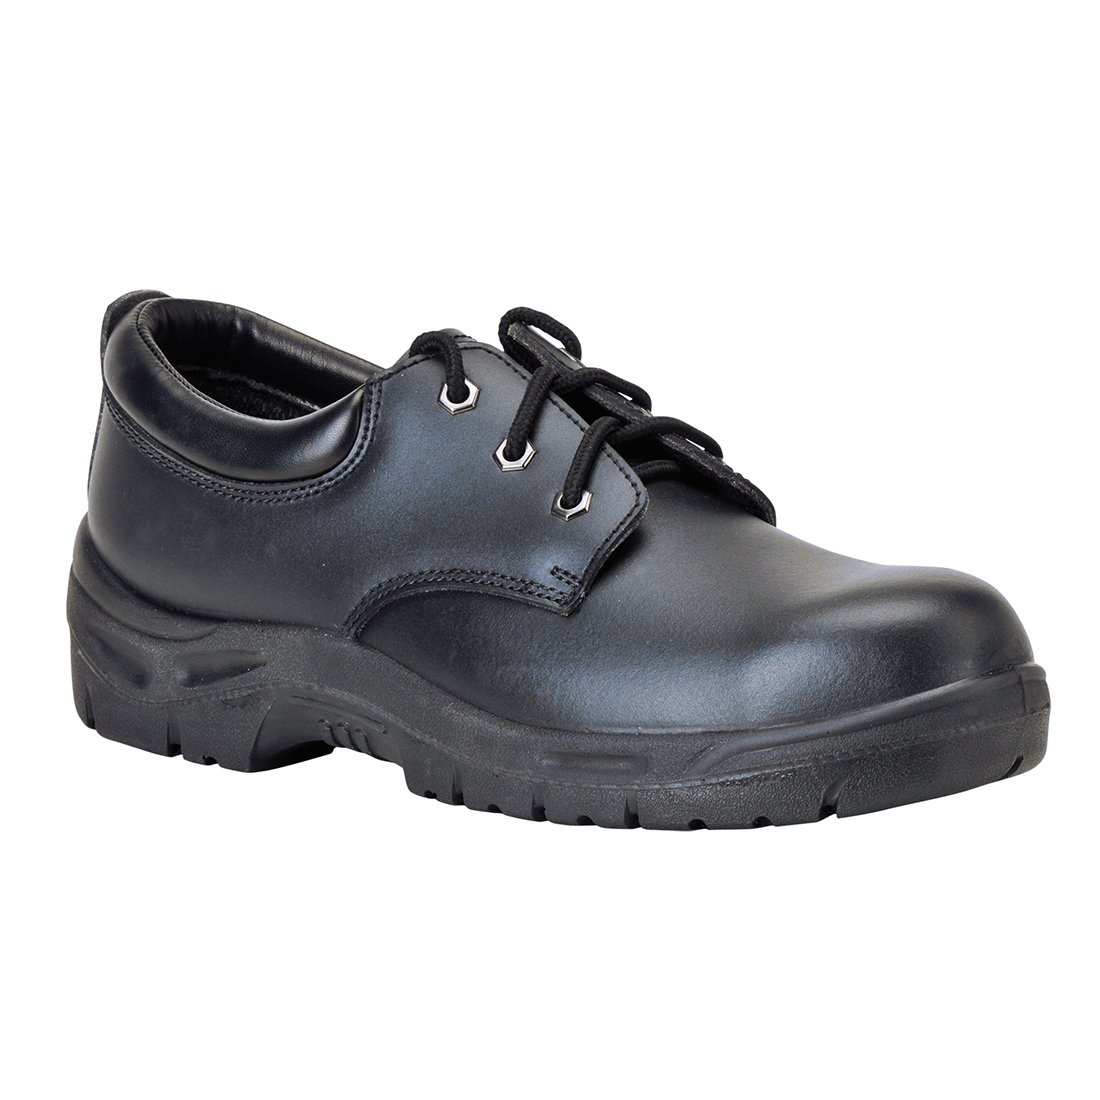 Steelite Shoe S3